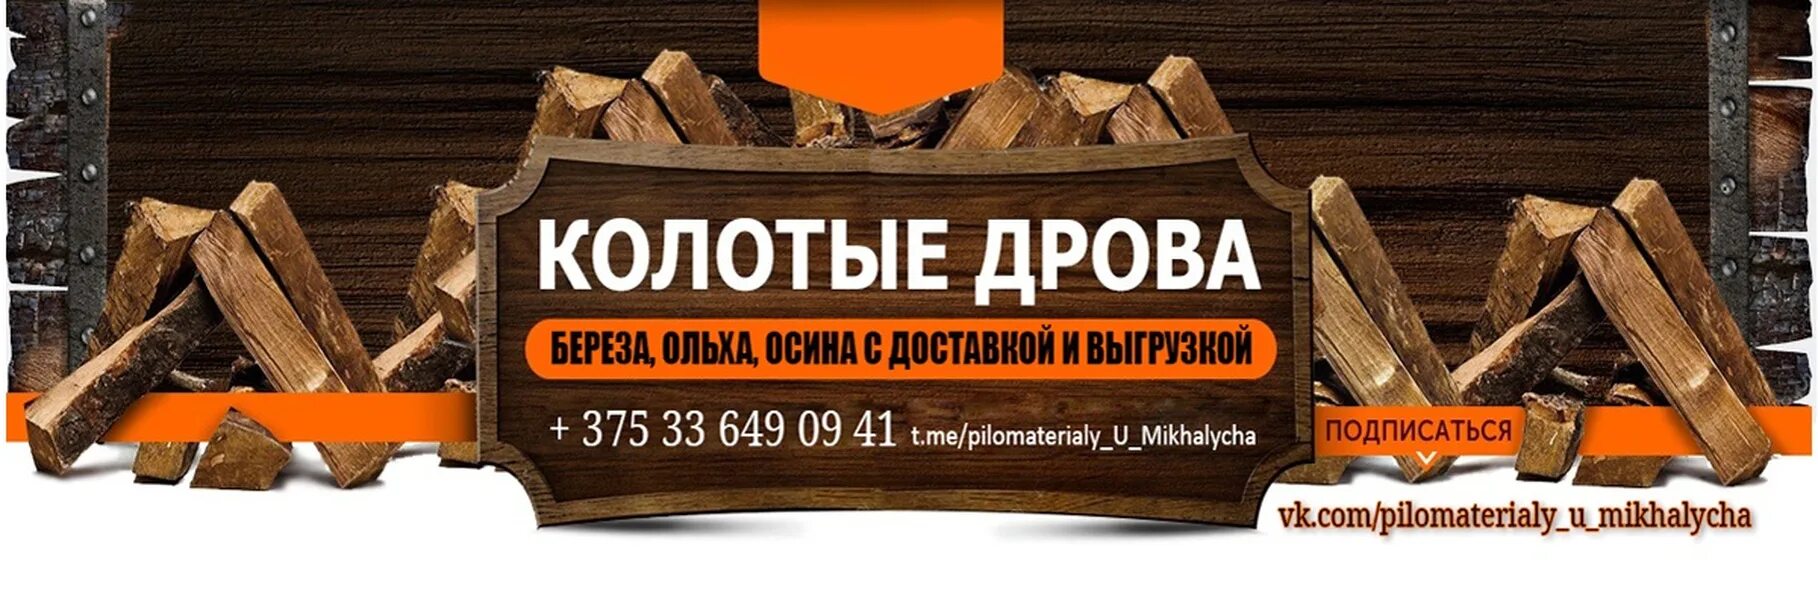 Предложение слова дрова. Реклама продажи дров. Визитка продажа дров. Баннер дрова. Колотые дрова визитка.